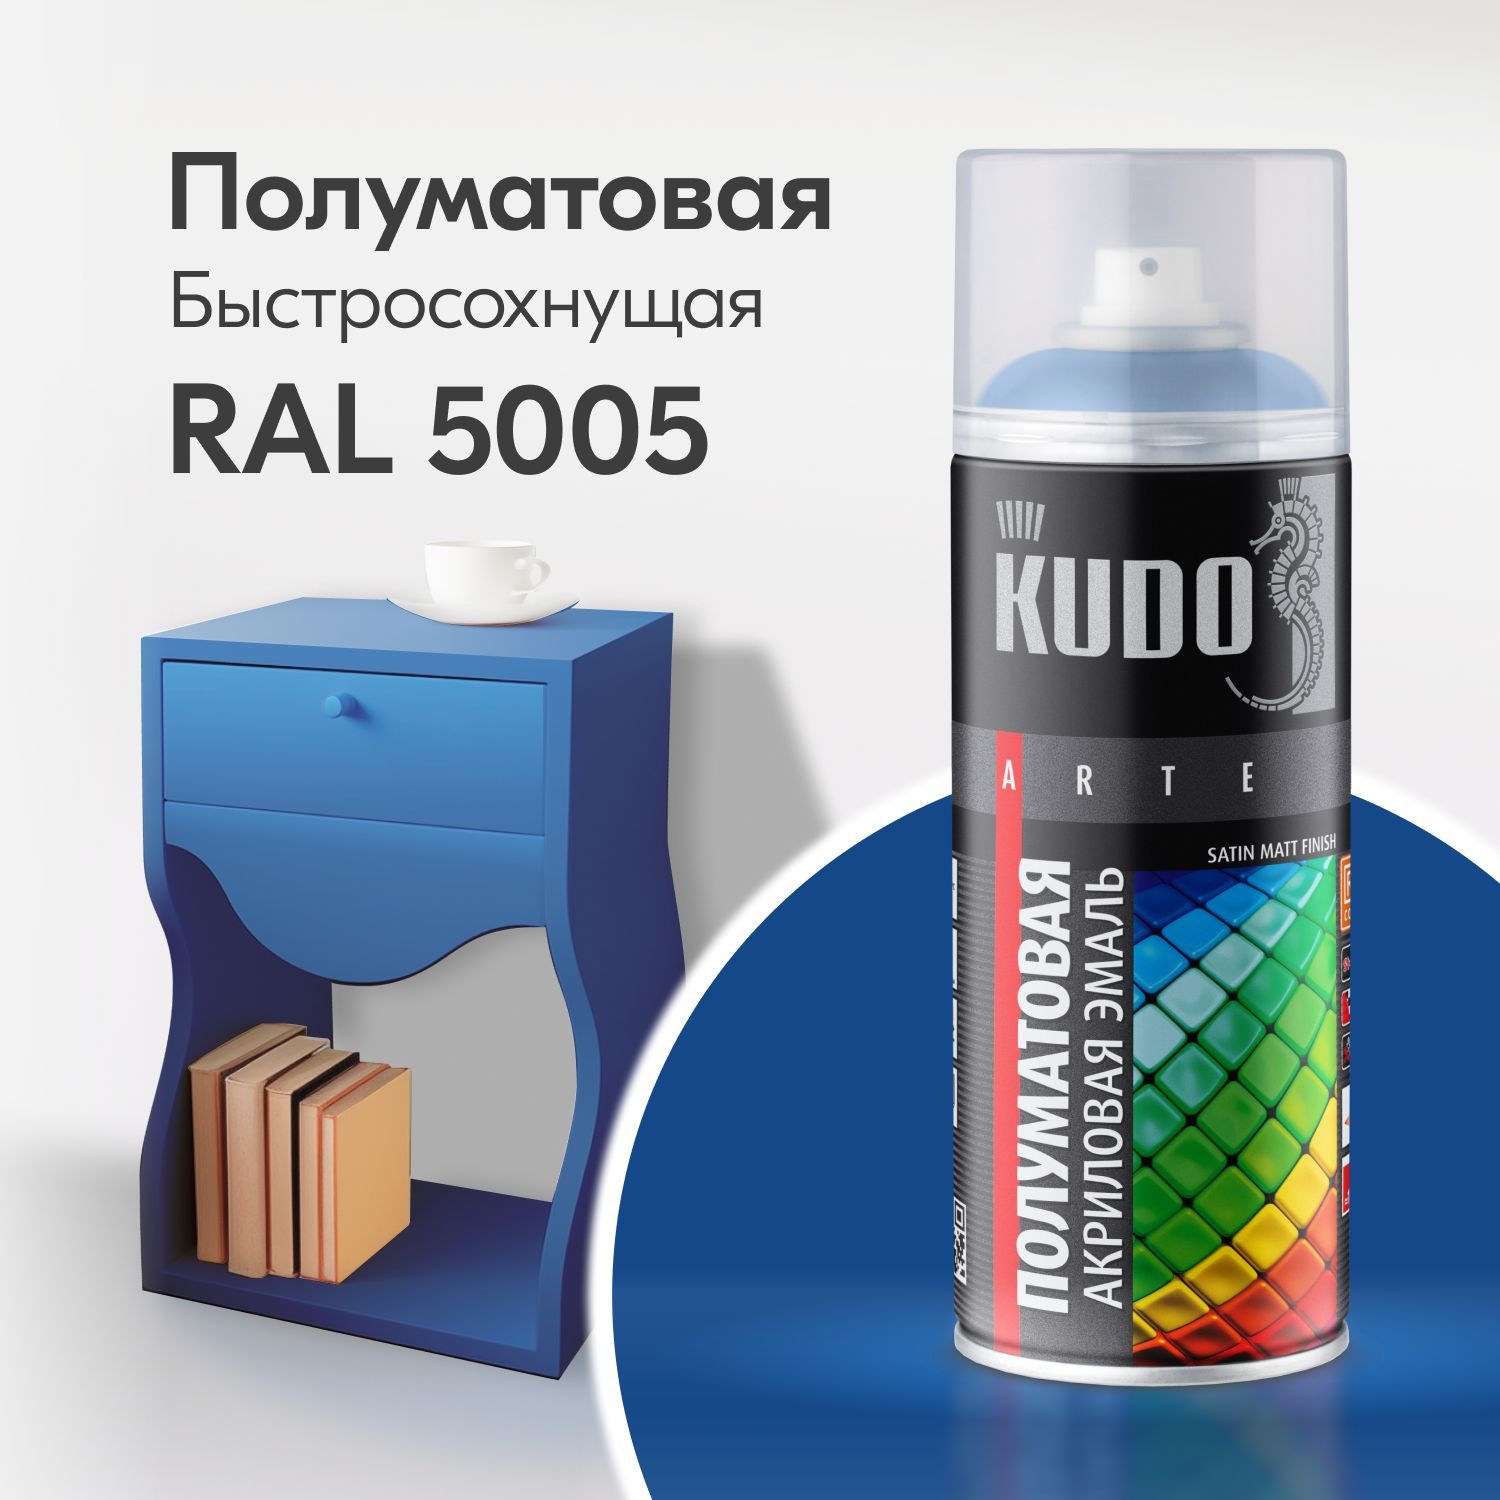 KUDO Эмаль универсальная акриловая satin RAL 5005 сигнально-синяя новинка KU-0A5005